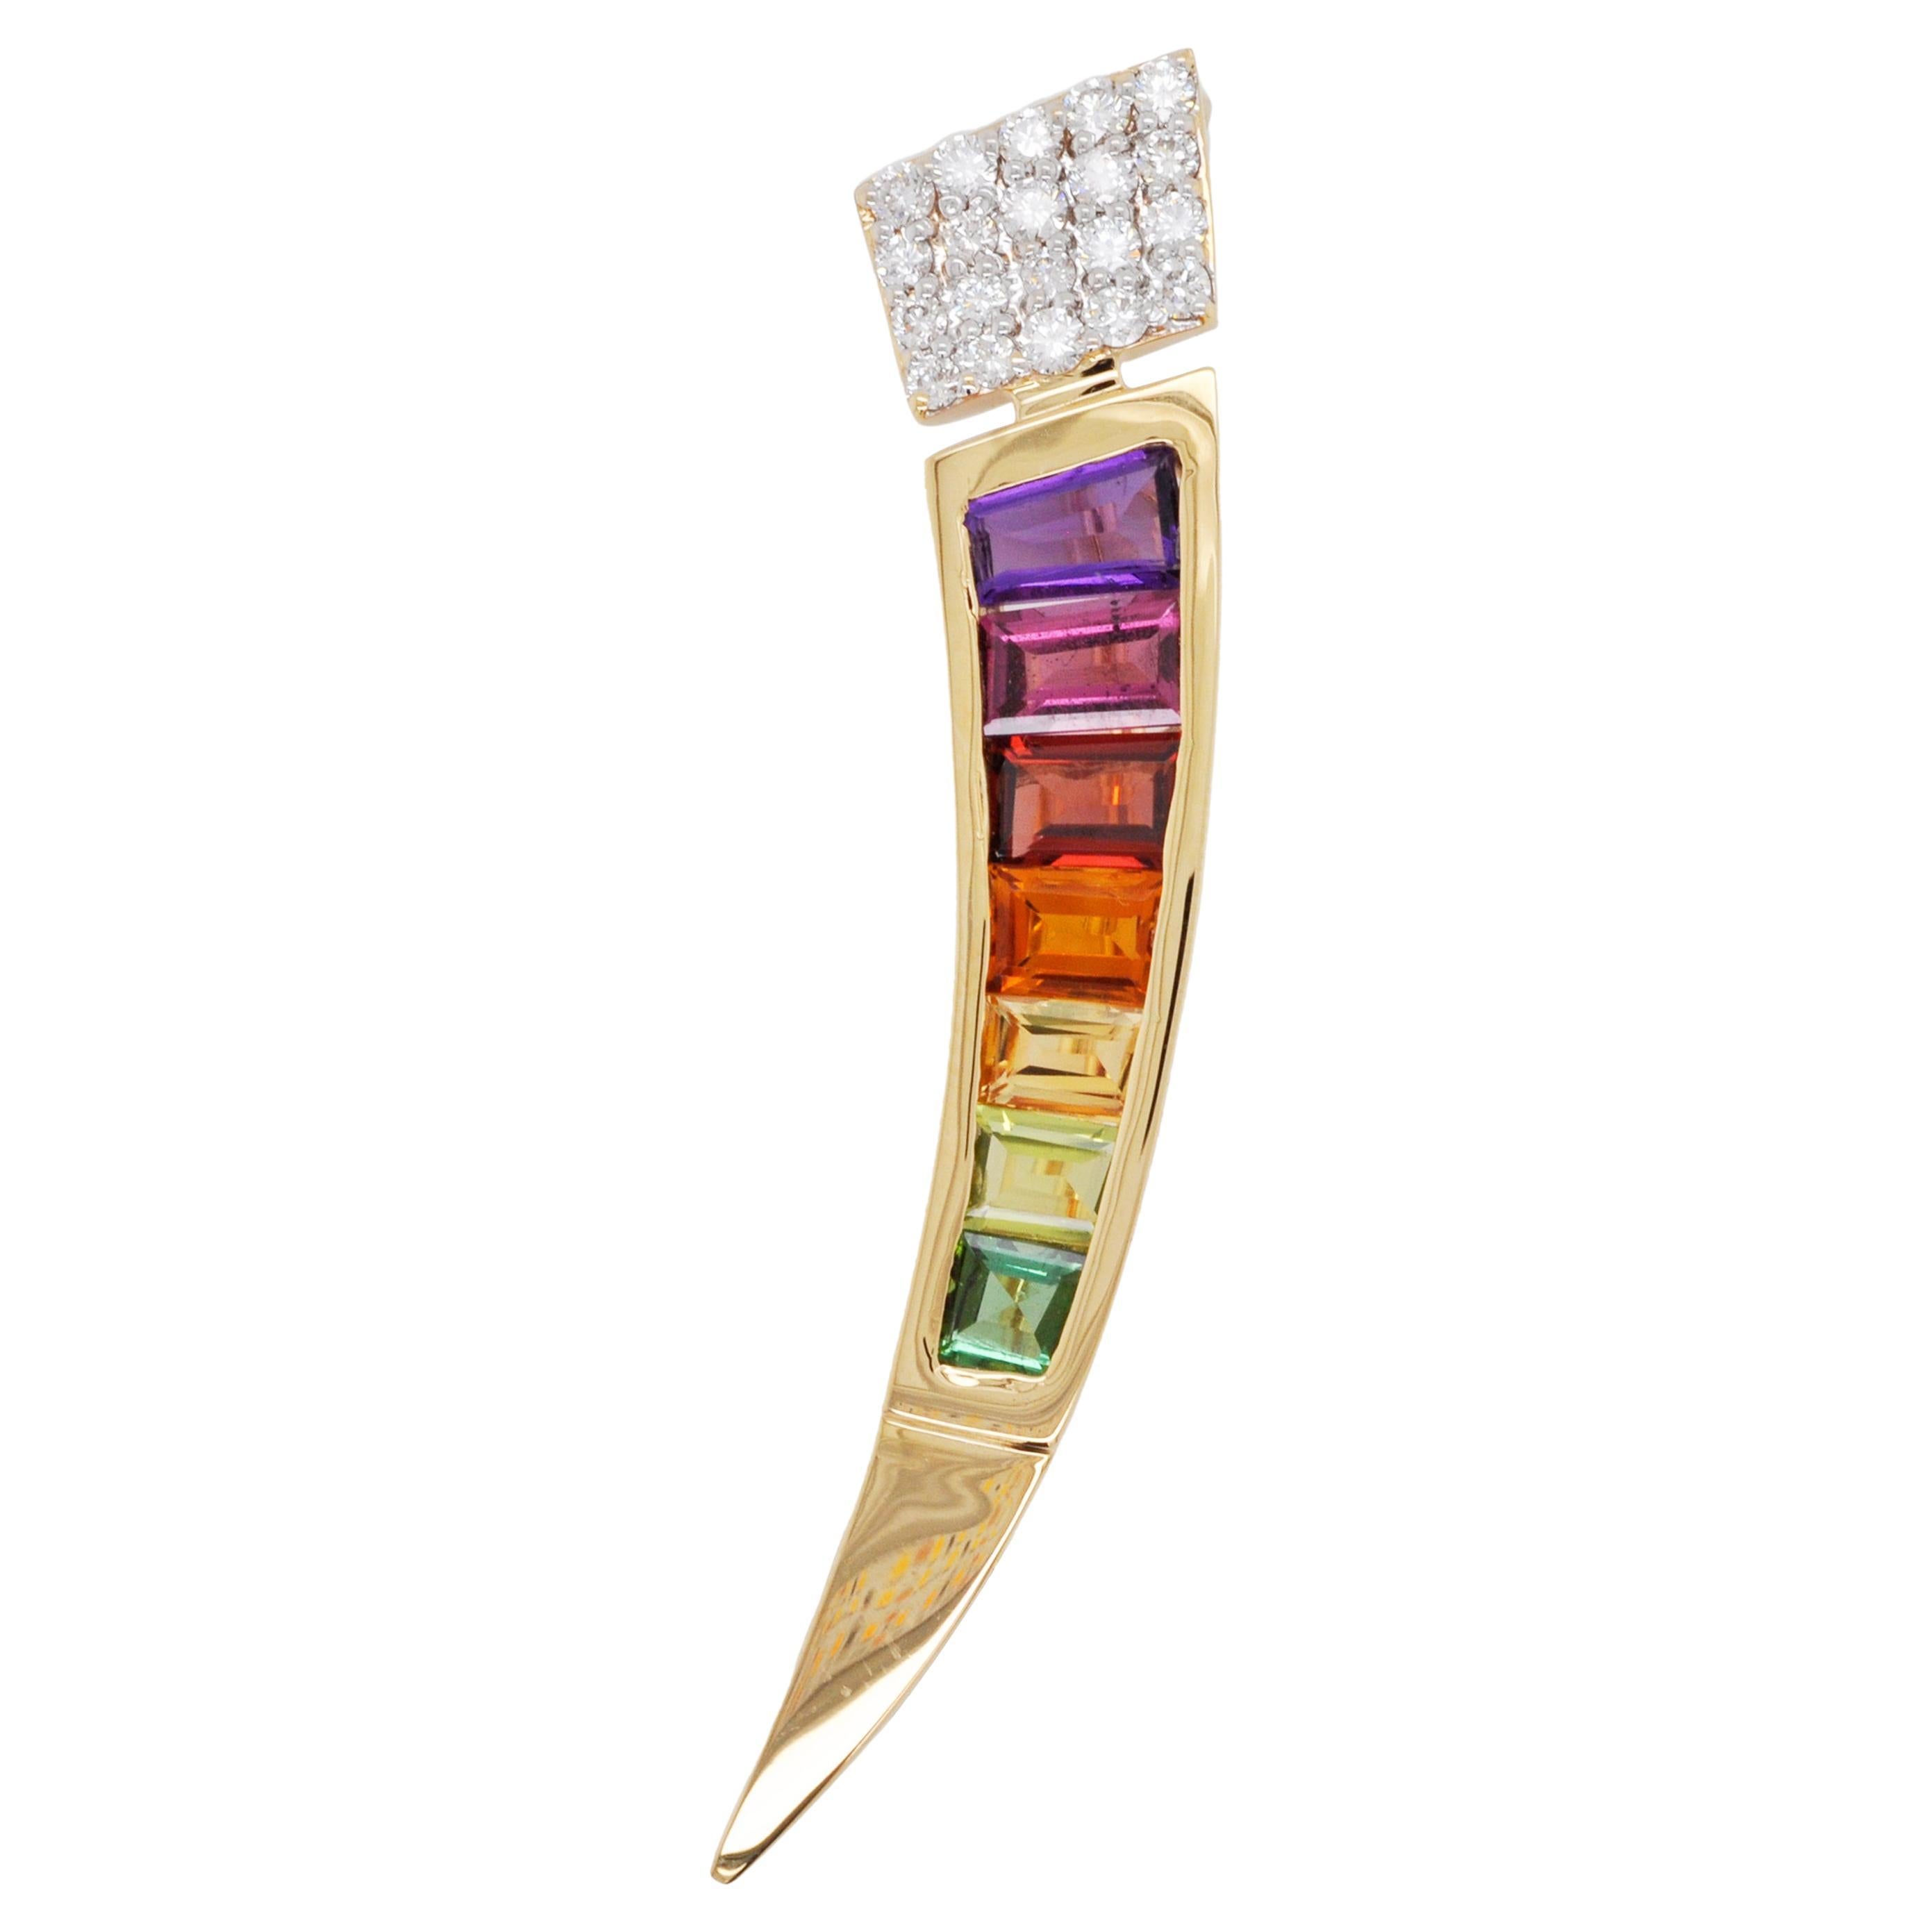 18 Karat Gold Muticolor Regenbogen spitz zulaufende Baguette-Diamant-Anhänger Brosche